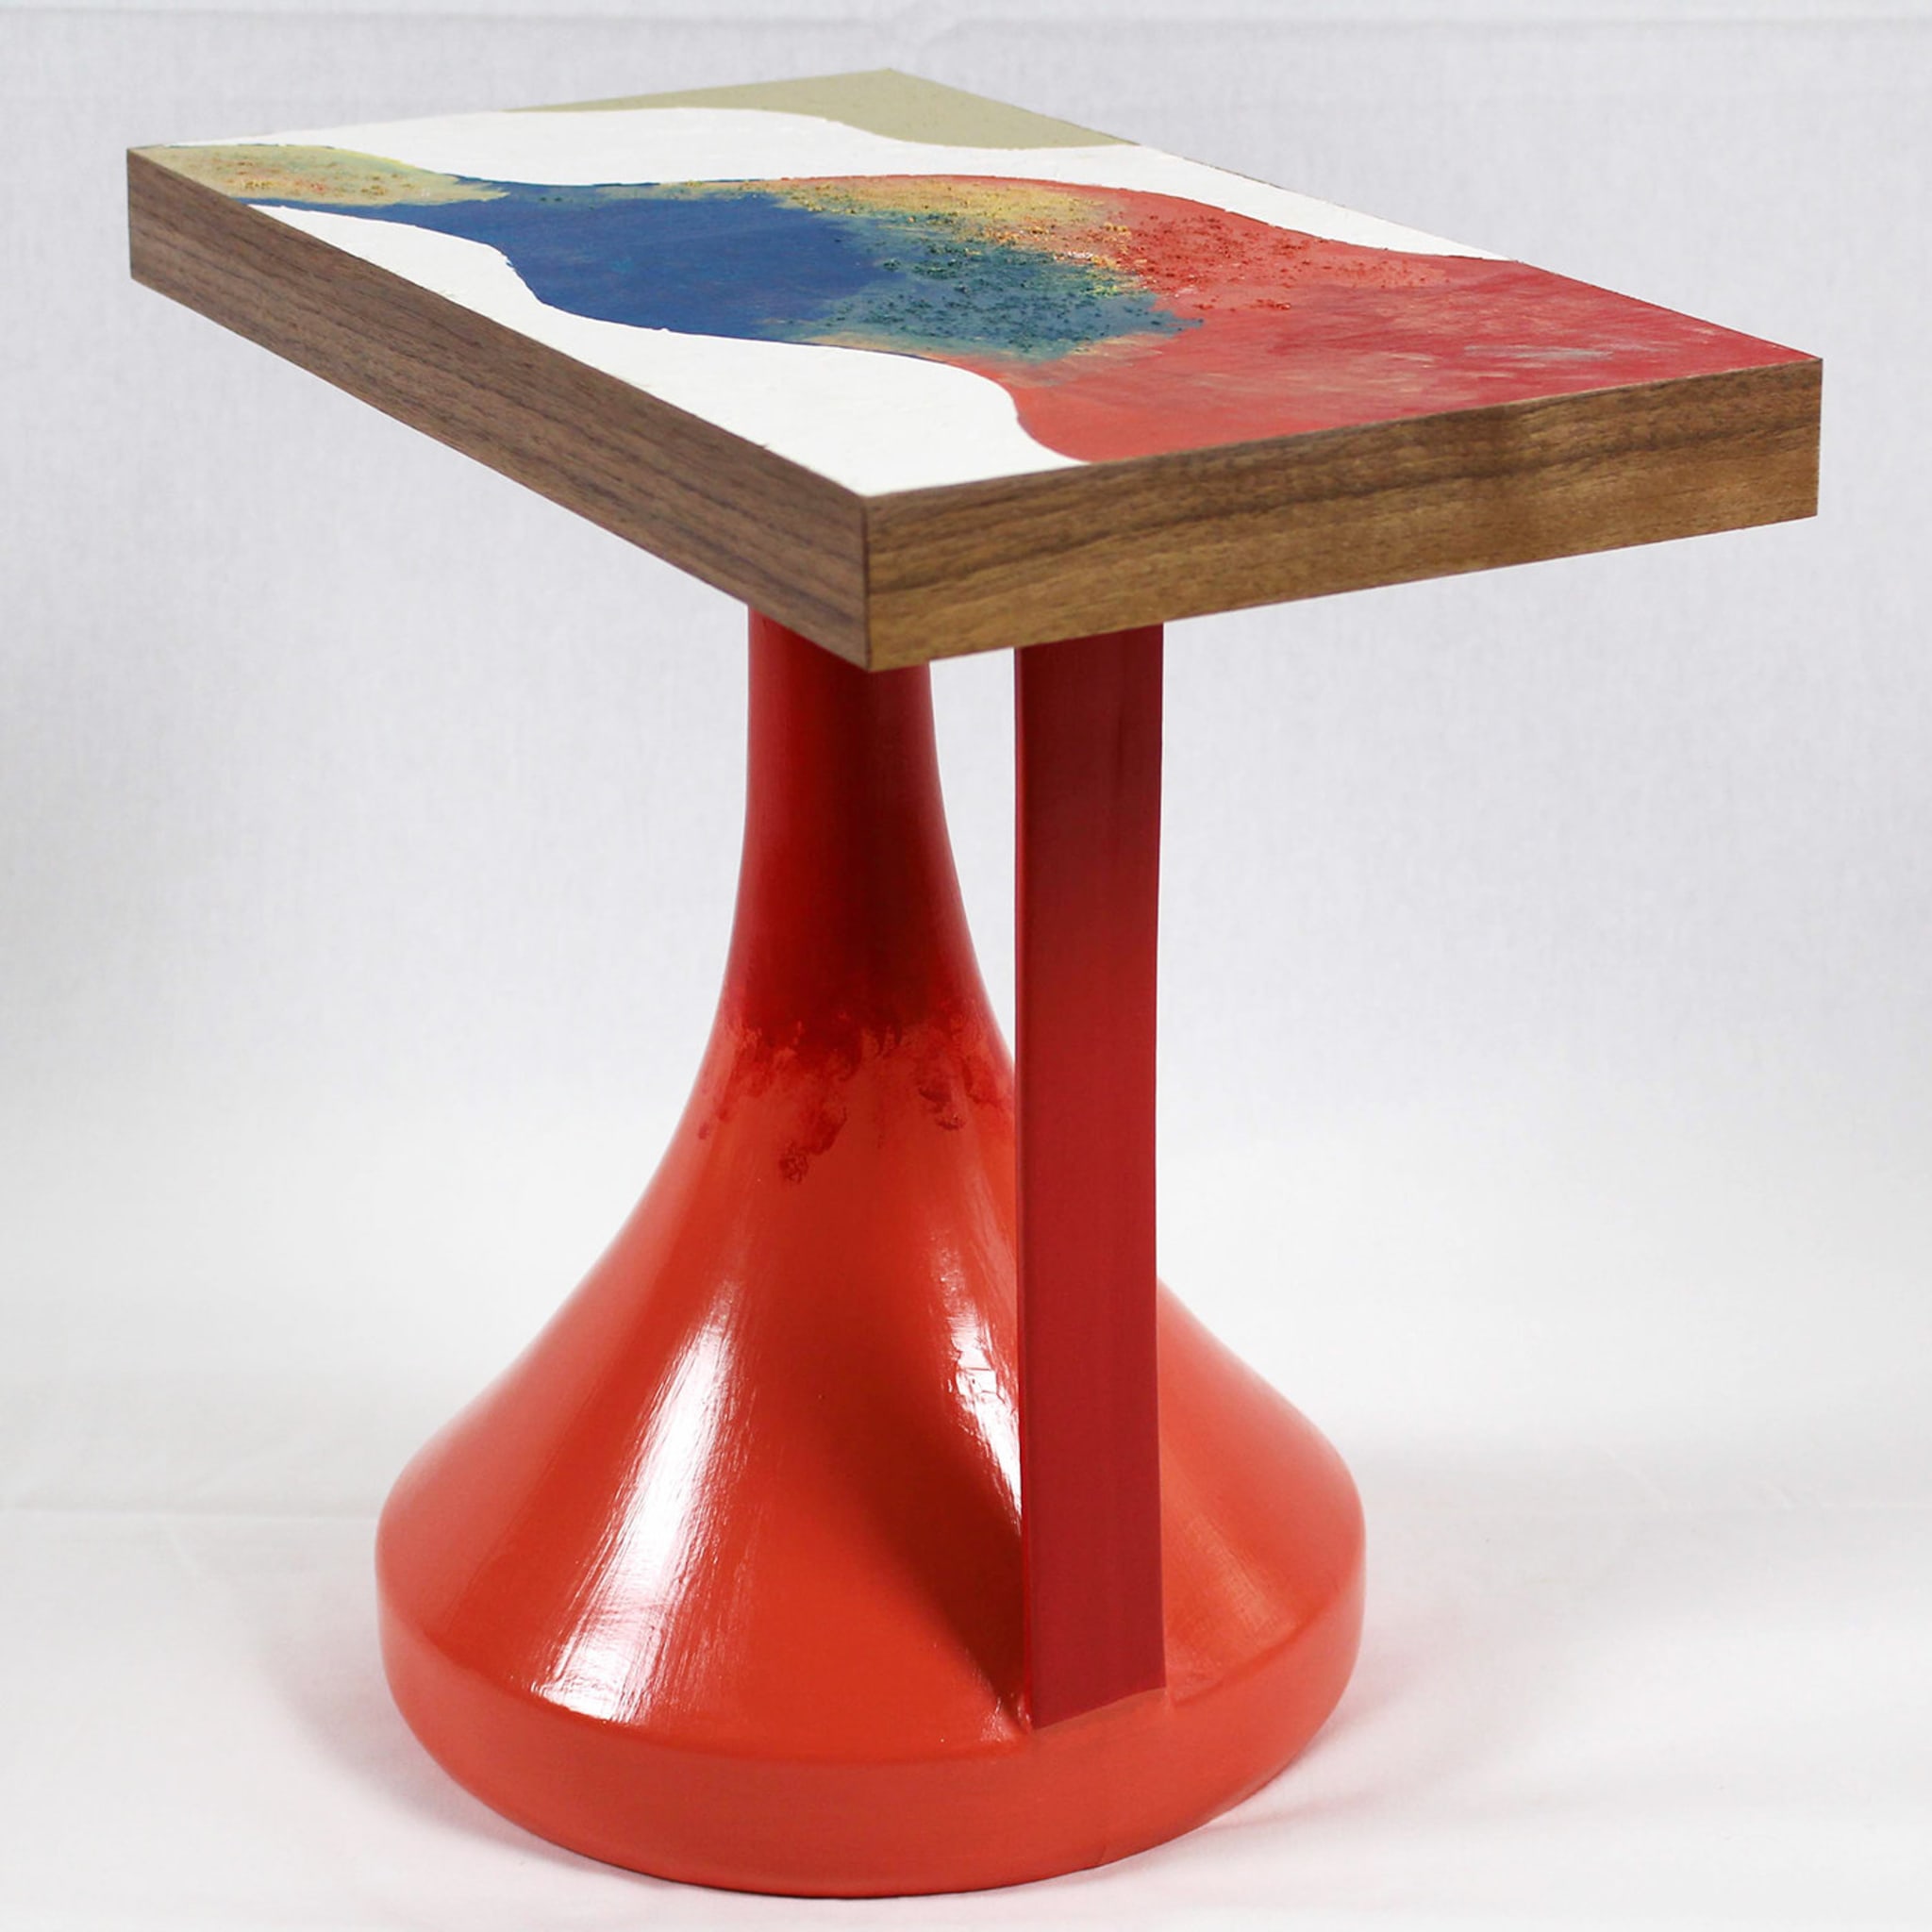 S1 Side Table by Mascia Meccani - Alternative view 1